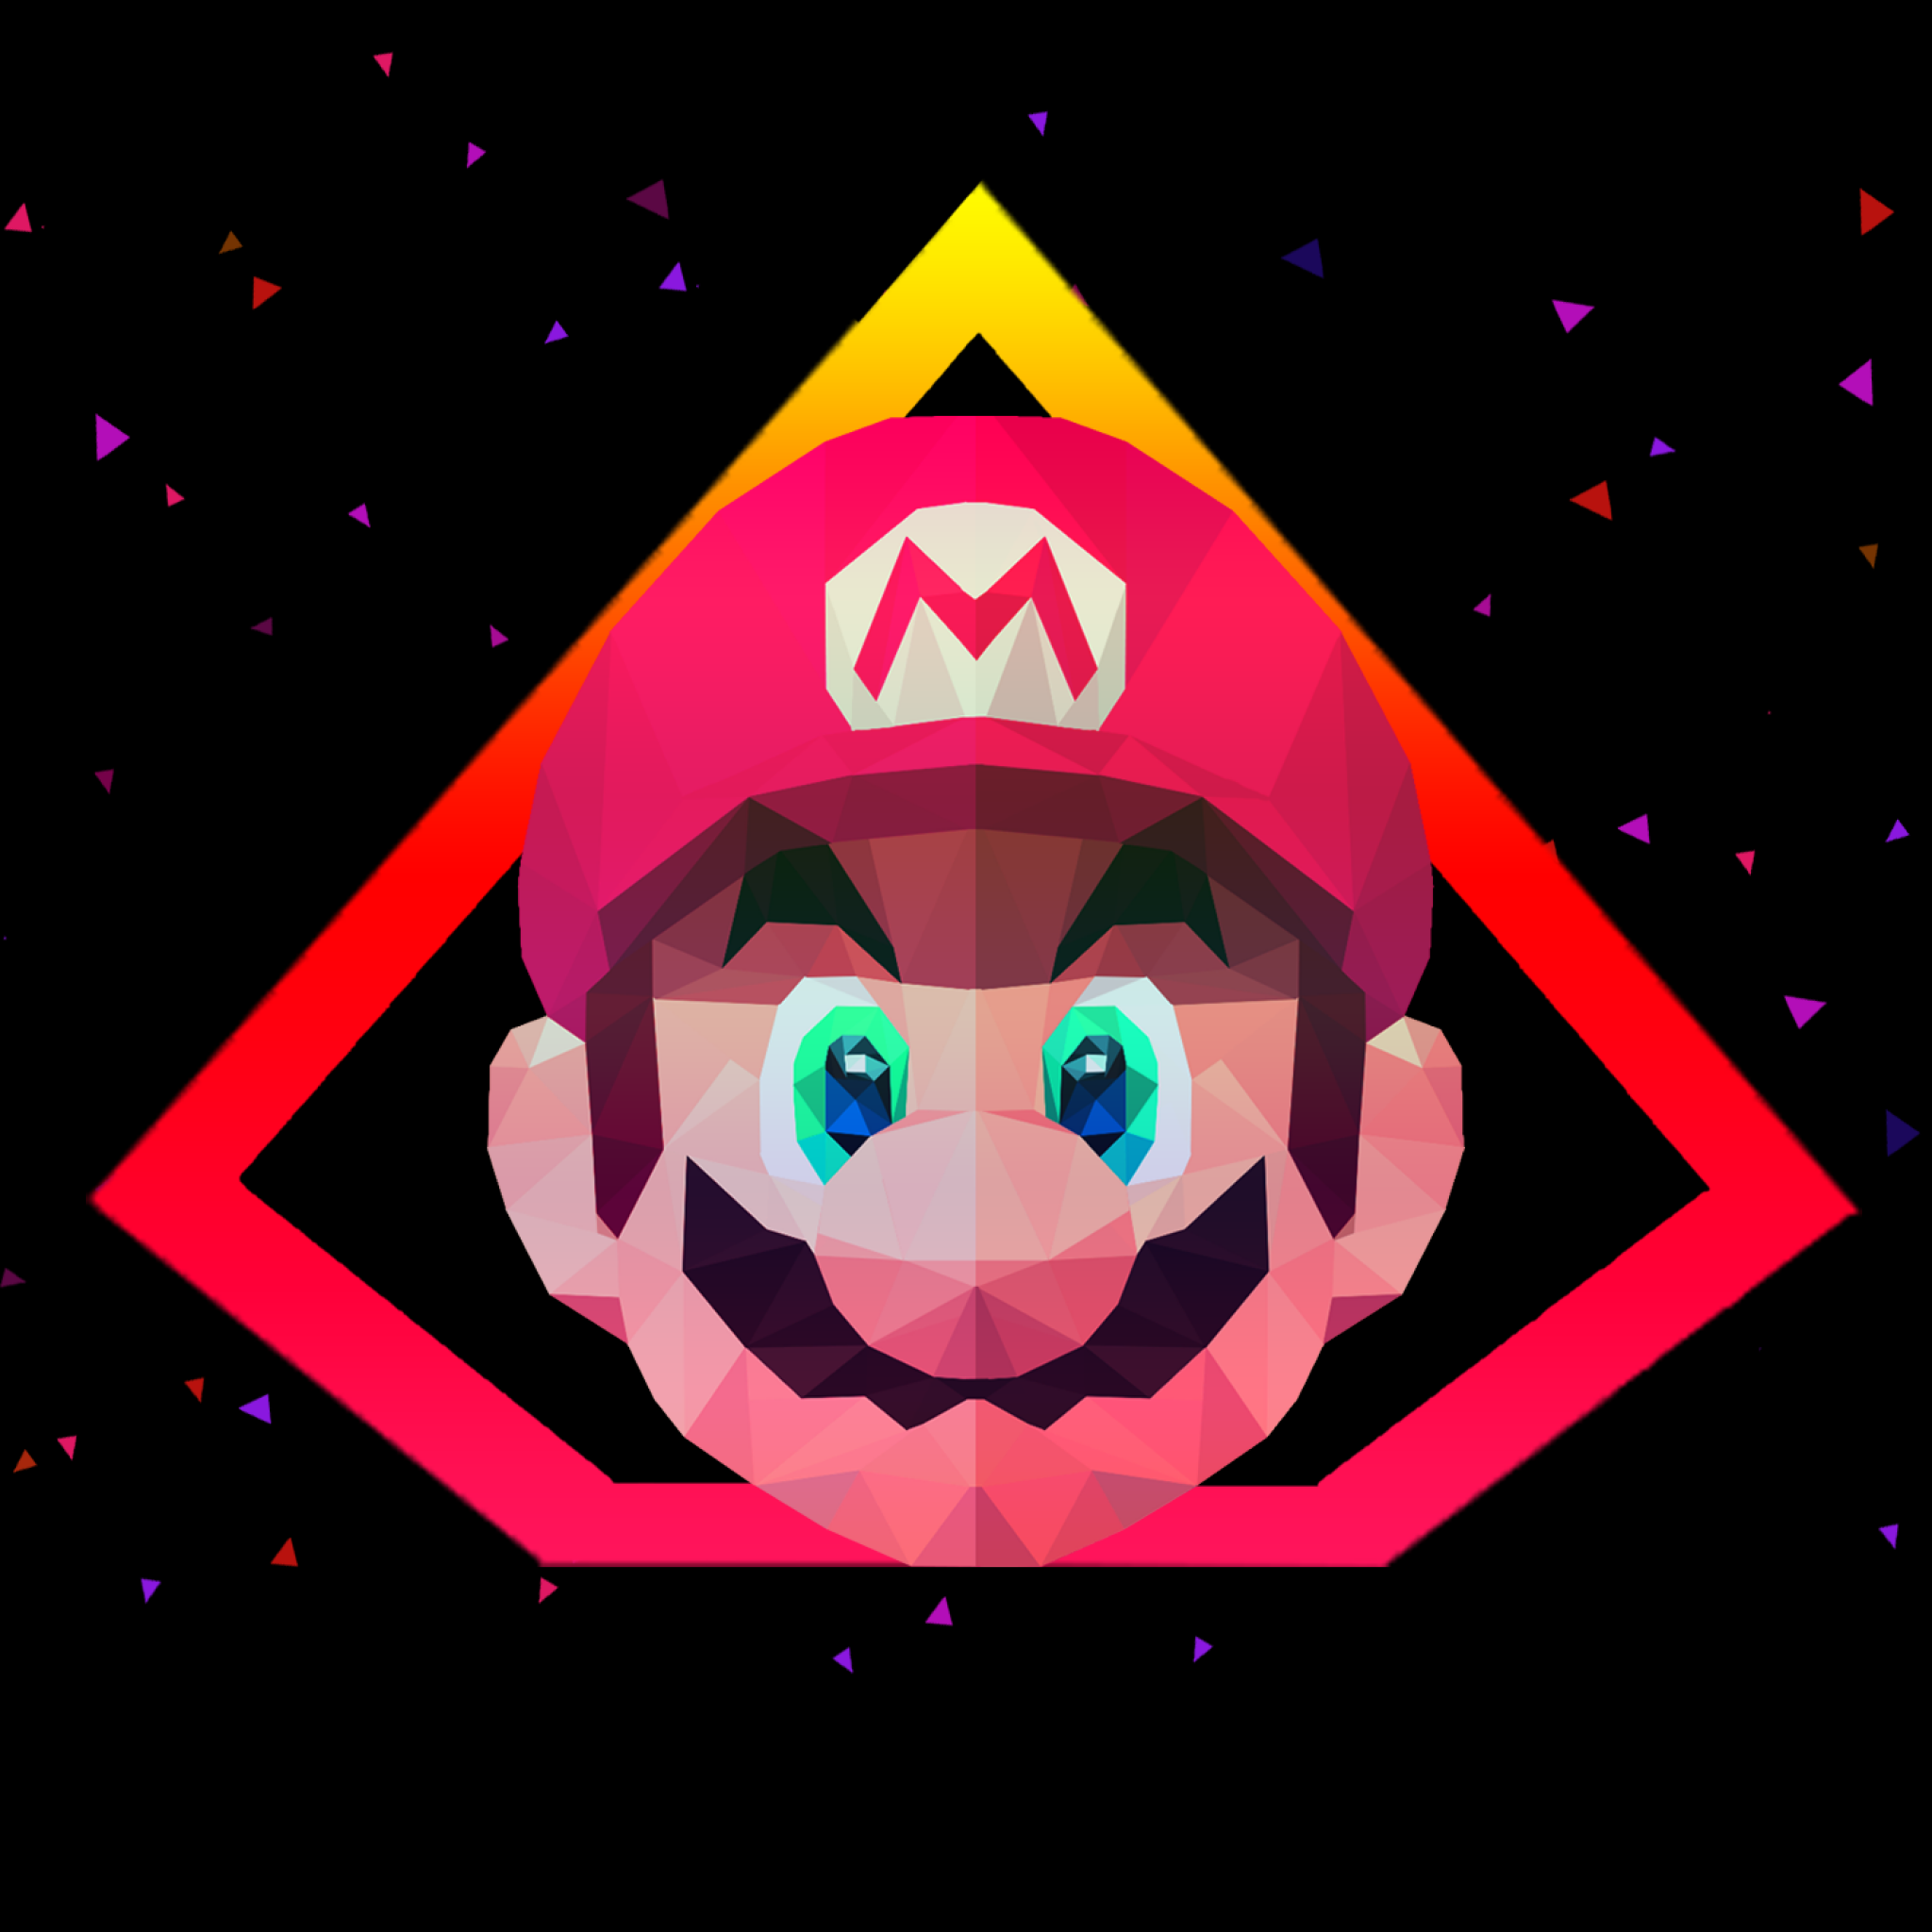 Wallpaper Super Mario, Artwork, Low poly, Minimal, HD, Creative